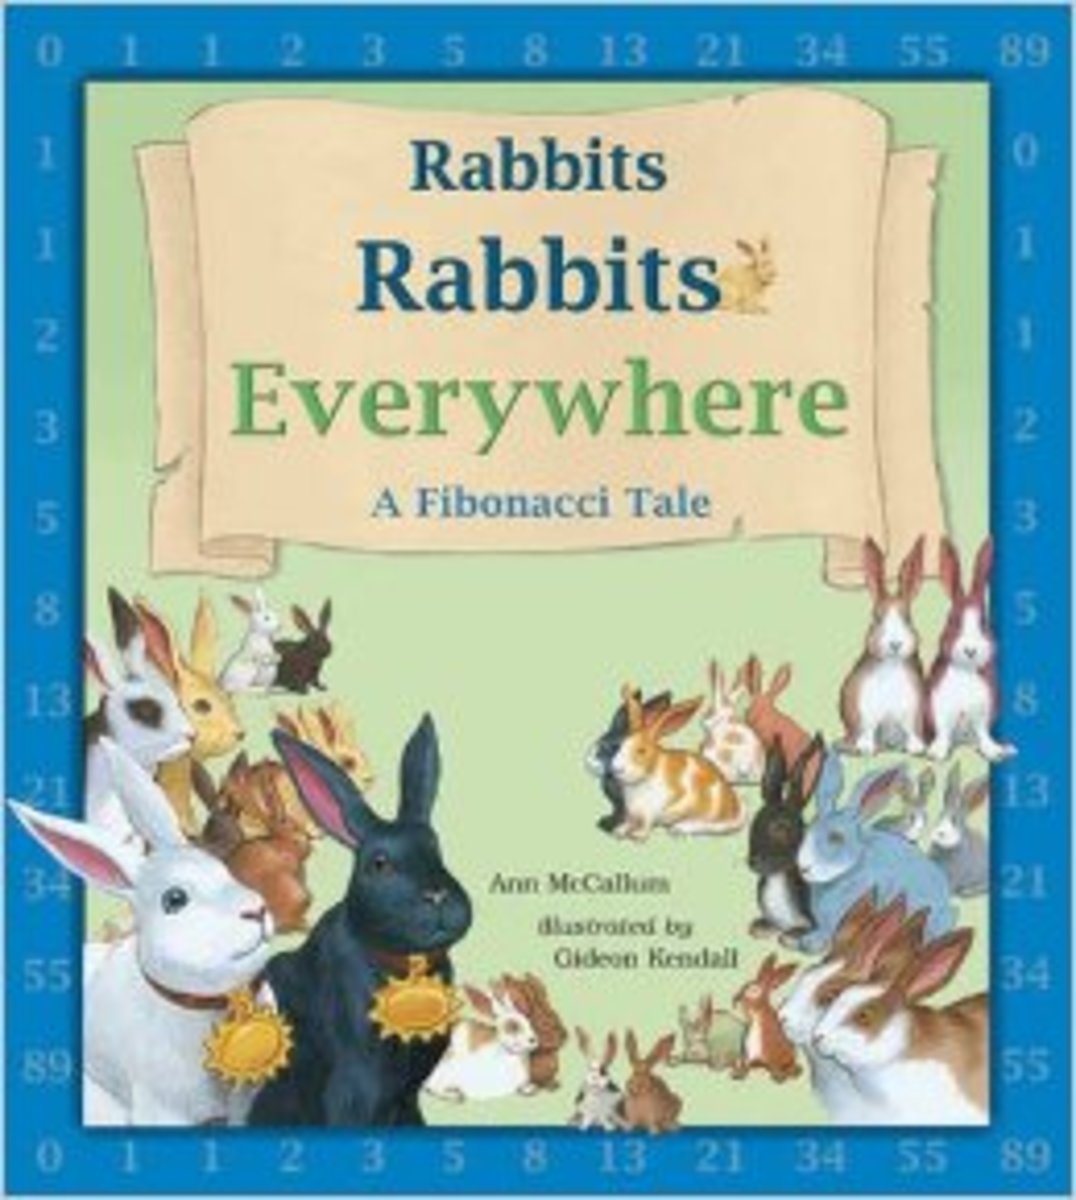 Rabbits Rabbits Everywhere: A Fibonacci Tale by Ann McCallum 